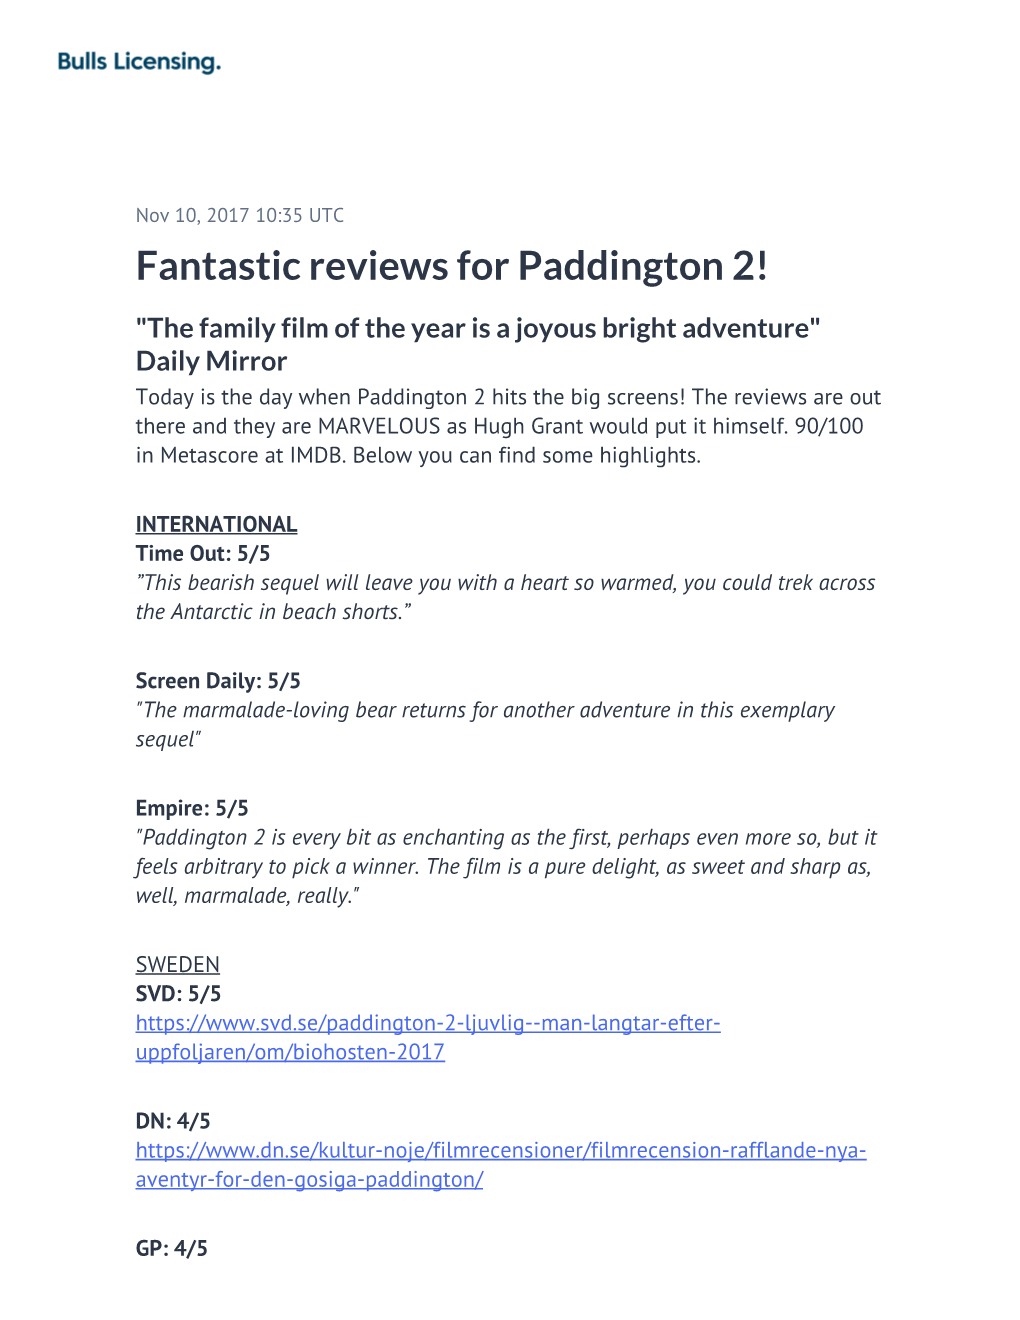 Fantastic Reviews for Paddington 2!